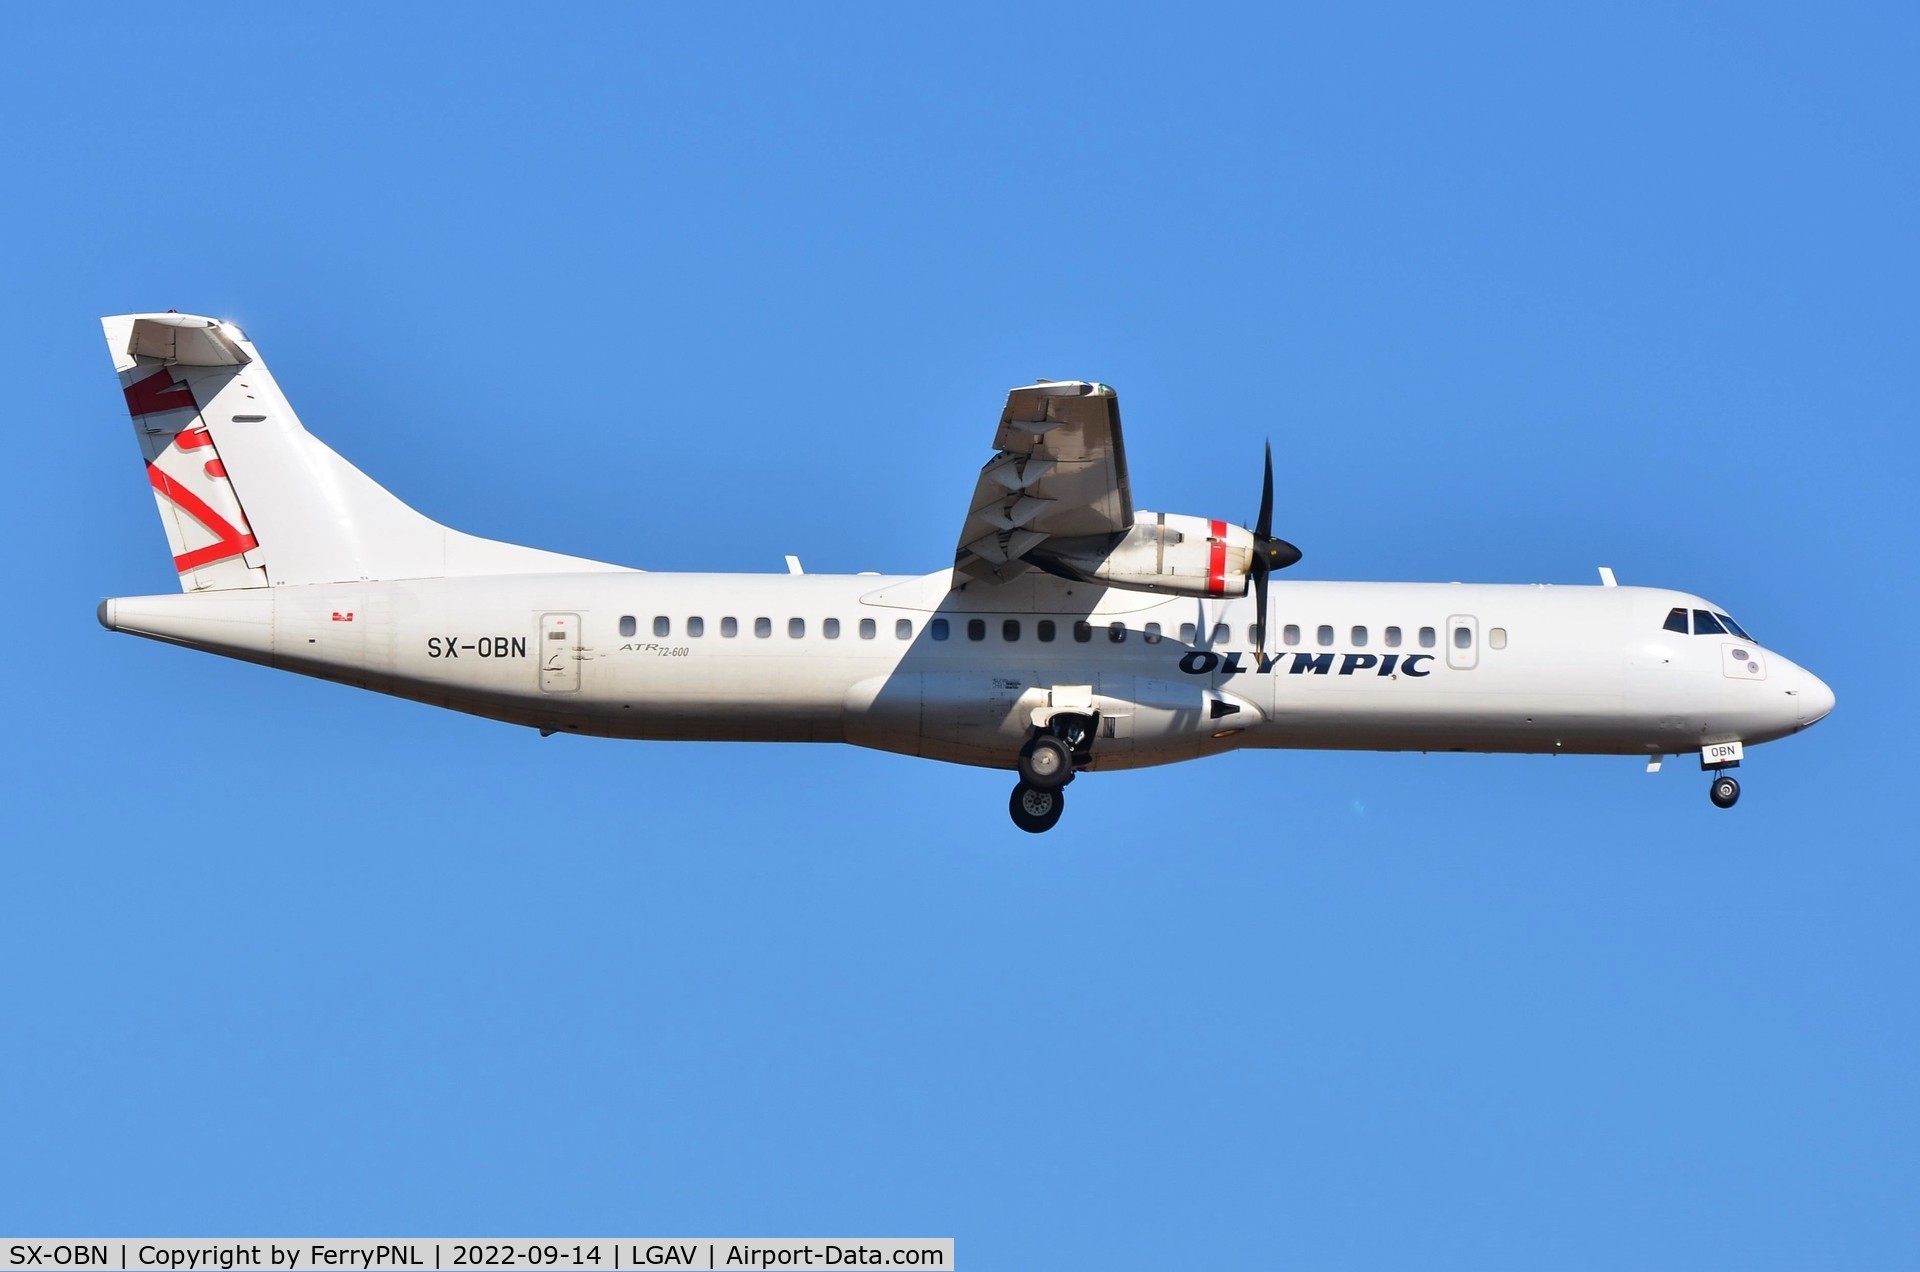 SX-OBN, 2013 ATR 72-600 C/N 1073, Arrival of Olympic (Virgin) ATR72